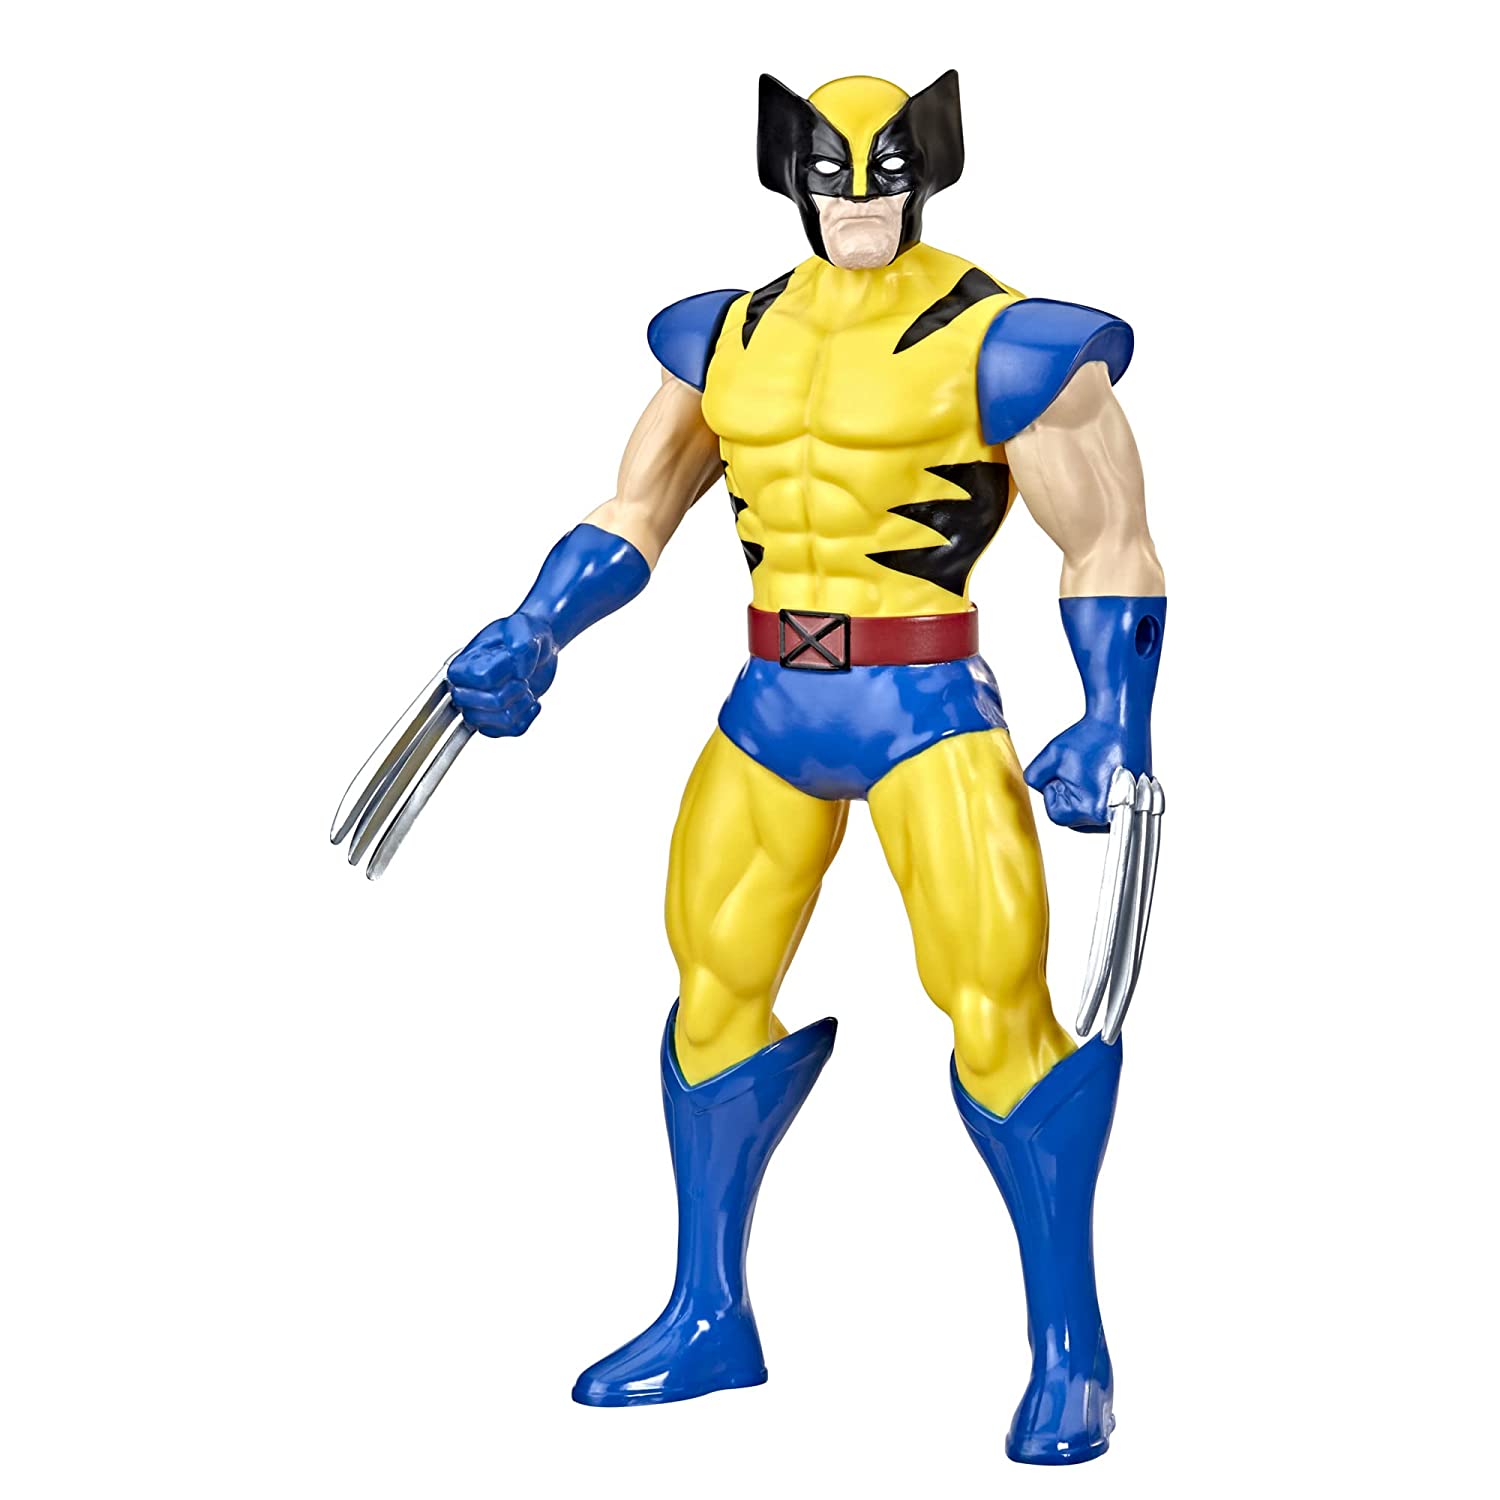 Marvel Super hero Wolverine Toys for Kids